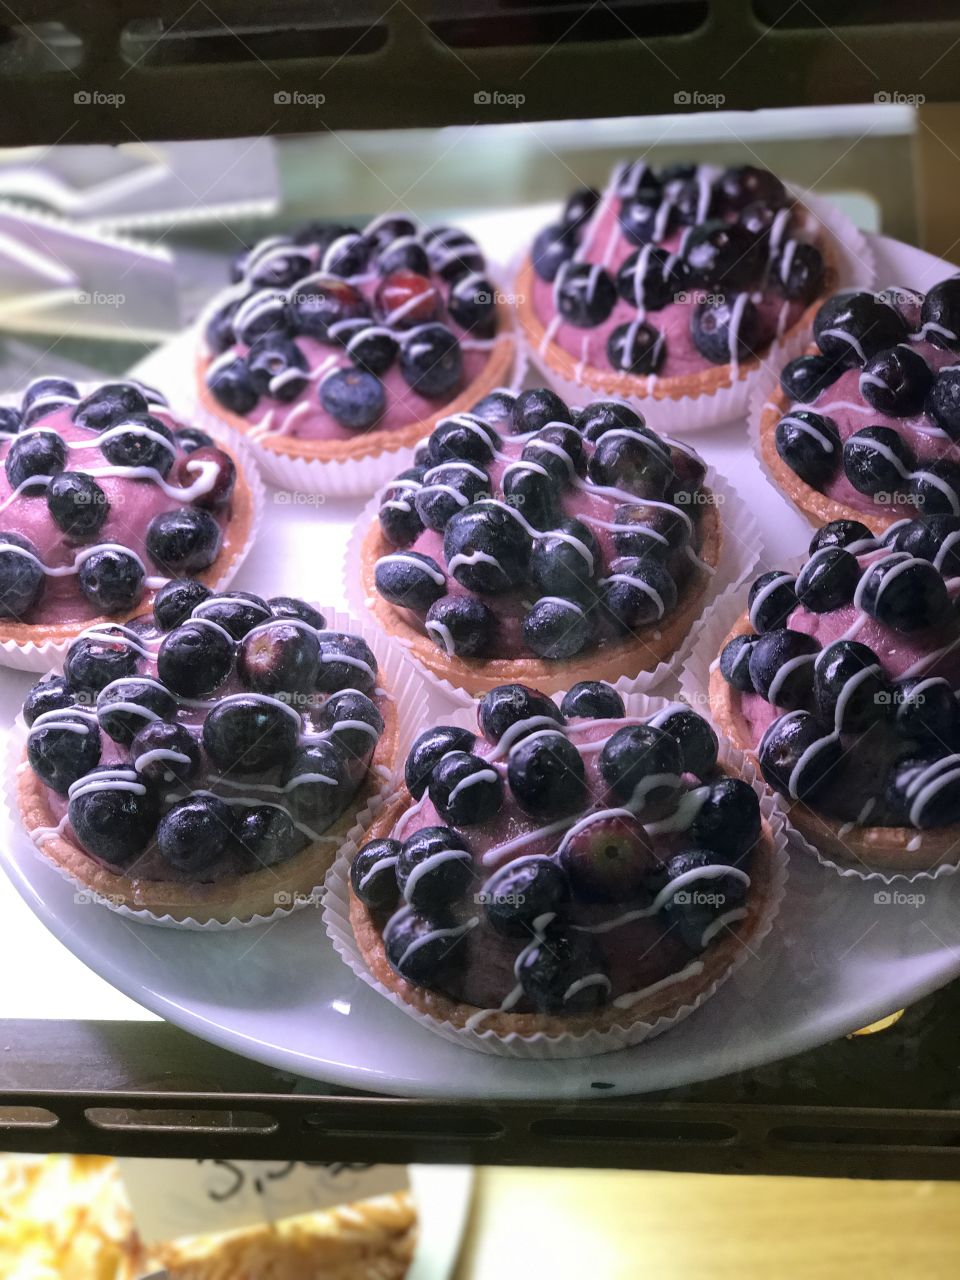 Blueberry torte Finland style